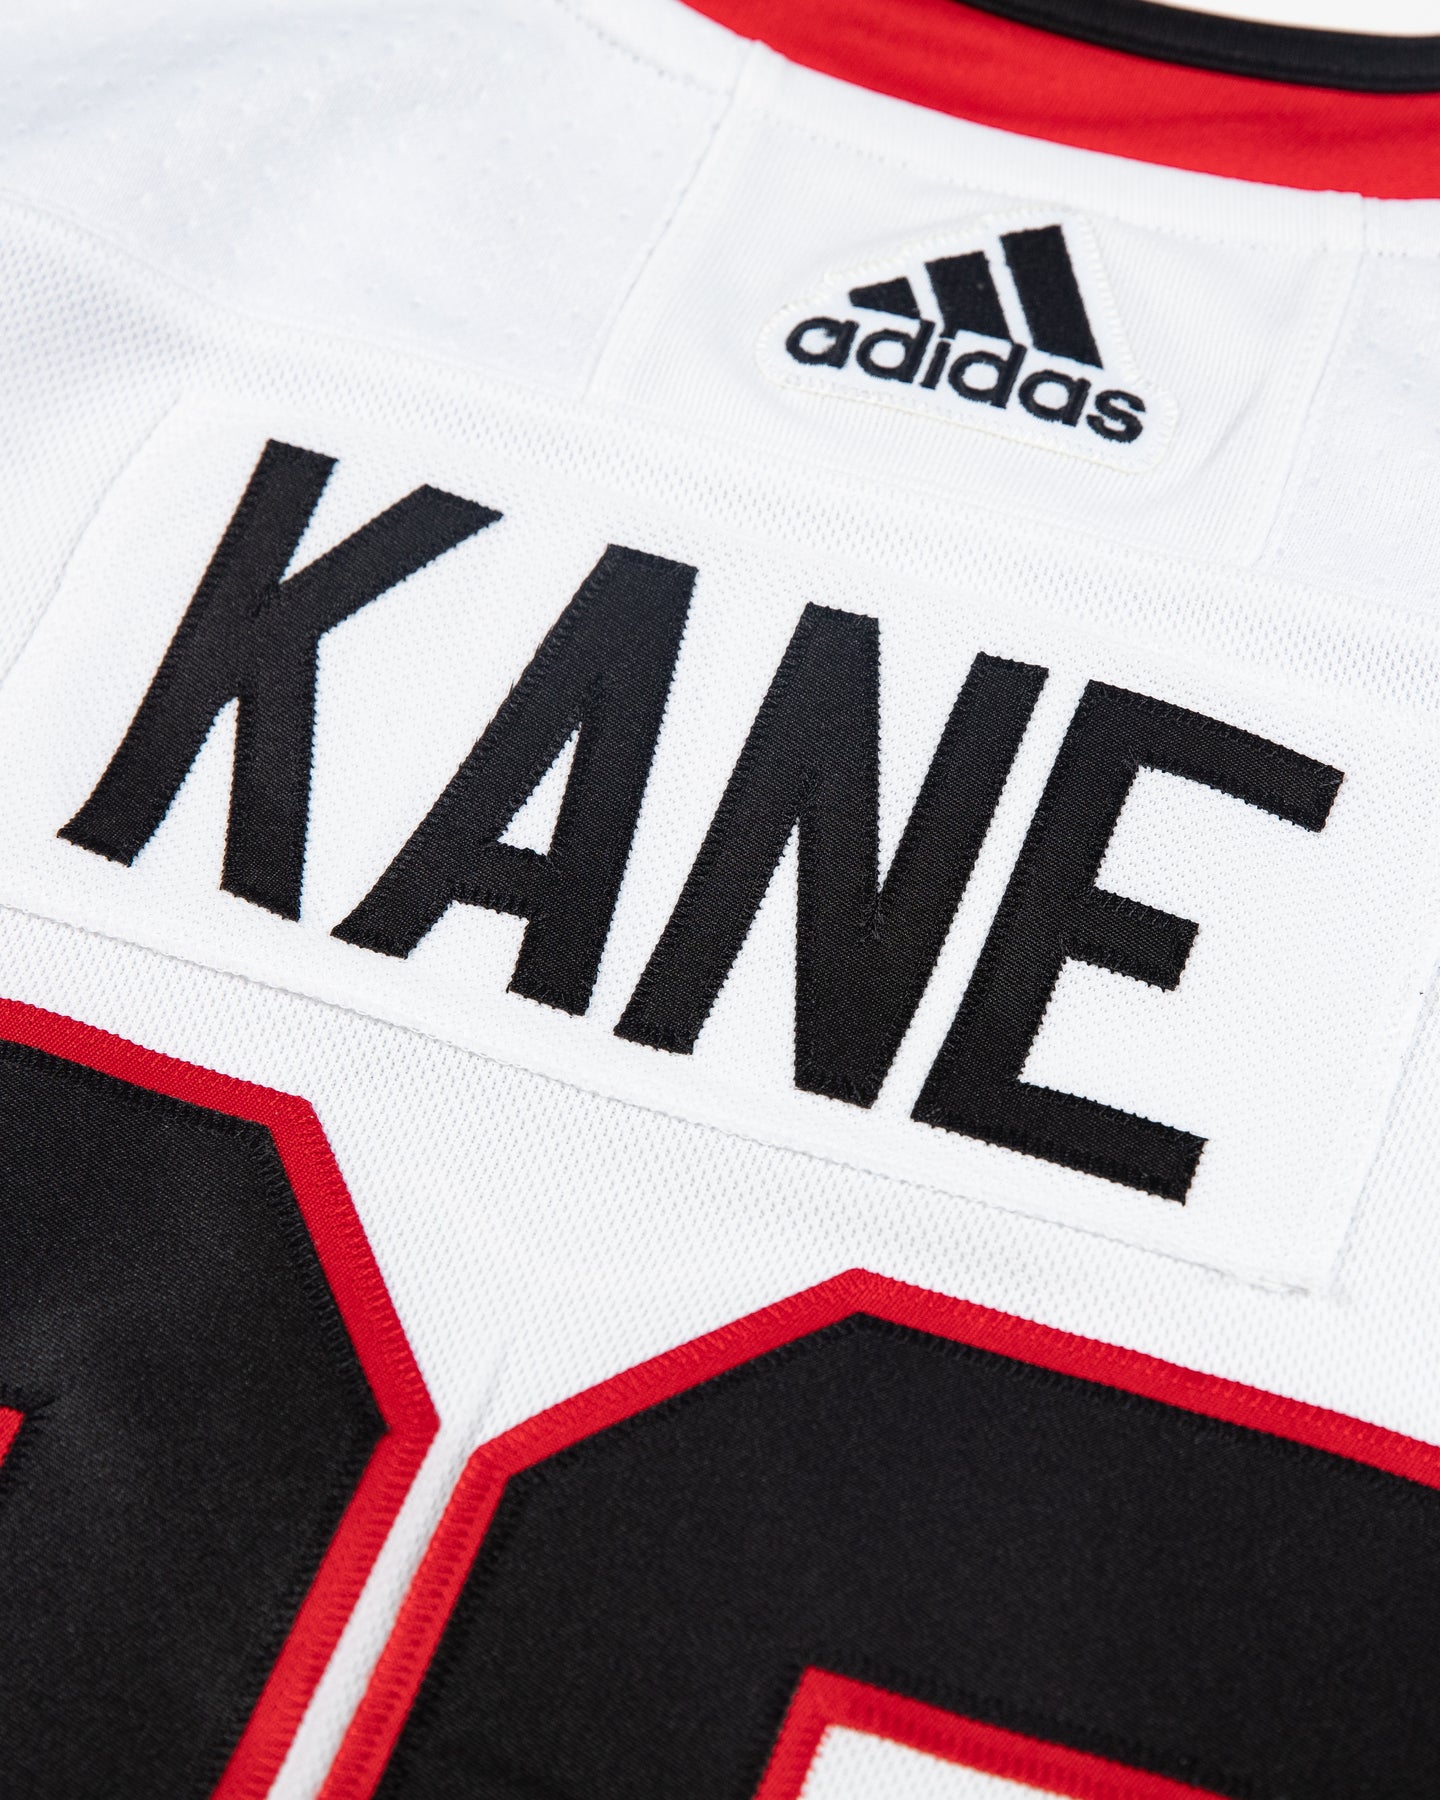 adidas Chicago Blackhawks Patrick Kane Authentic Home Jersey